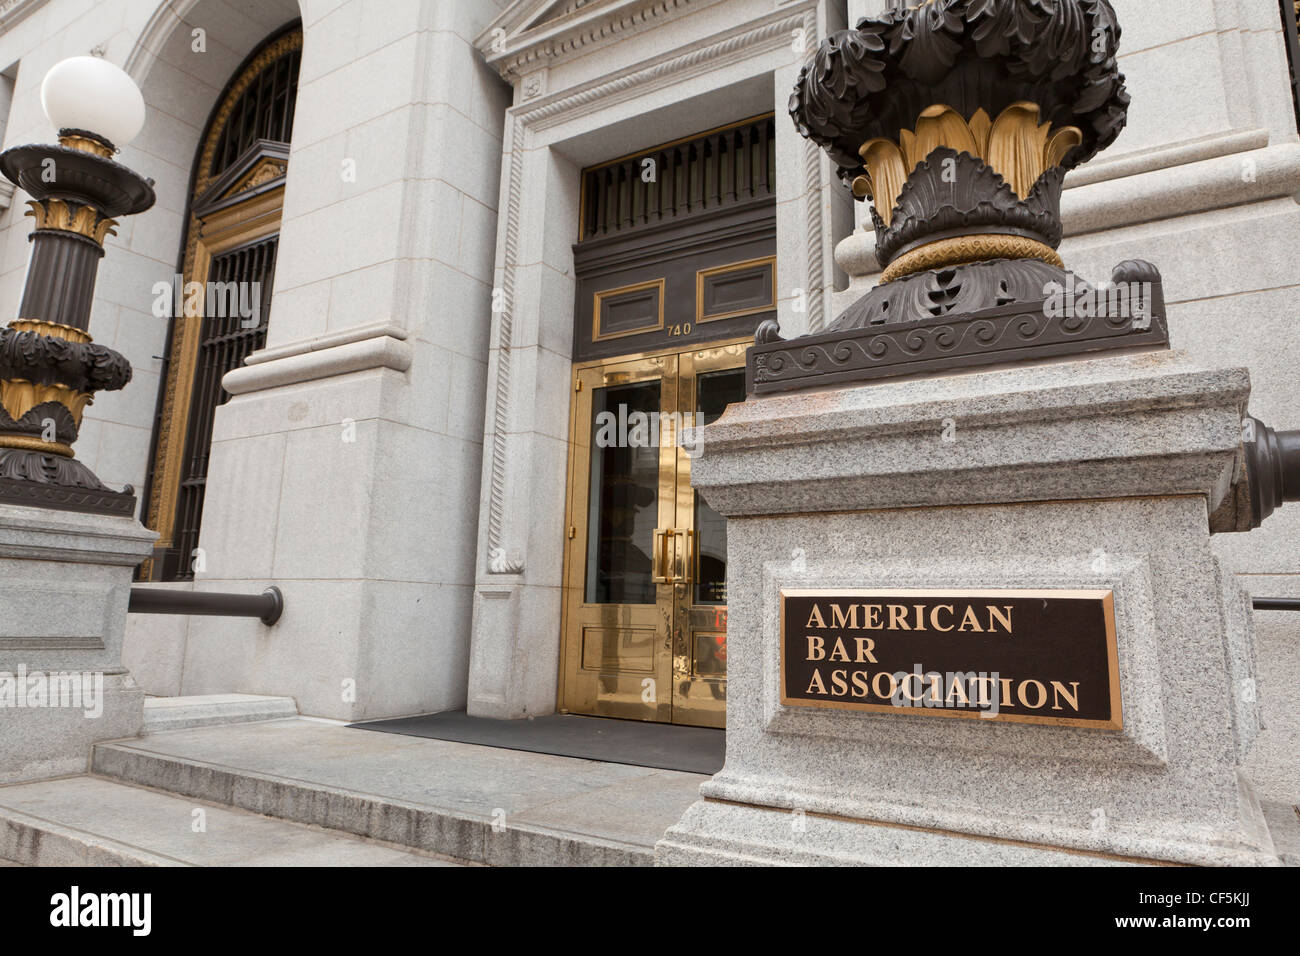 American Bar Association building front - Washington, DC USA Stock Photo